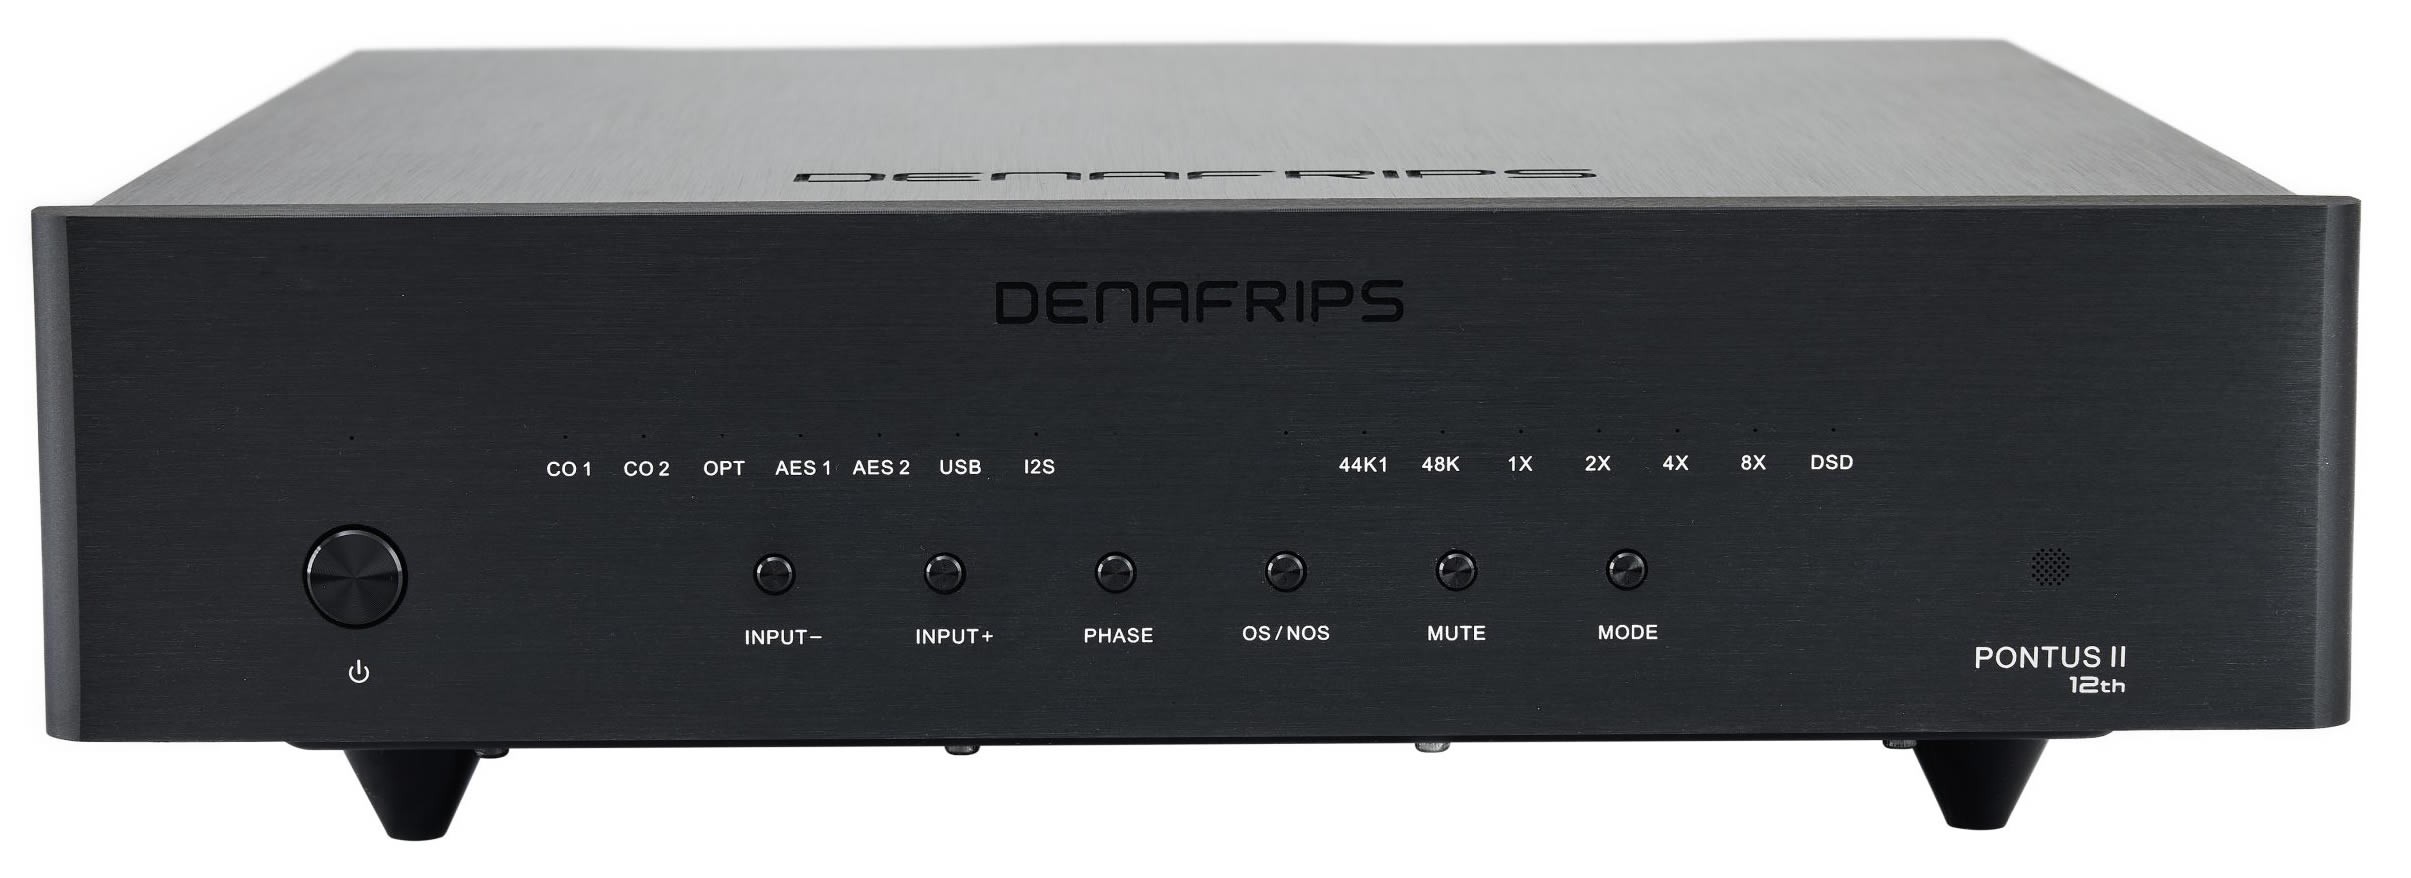 DENAFRIPS PONTUS II 12TH-1 DAC R2R NOS Balanced 1536kHz DSD1024 Black